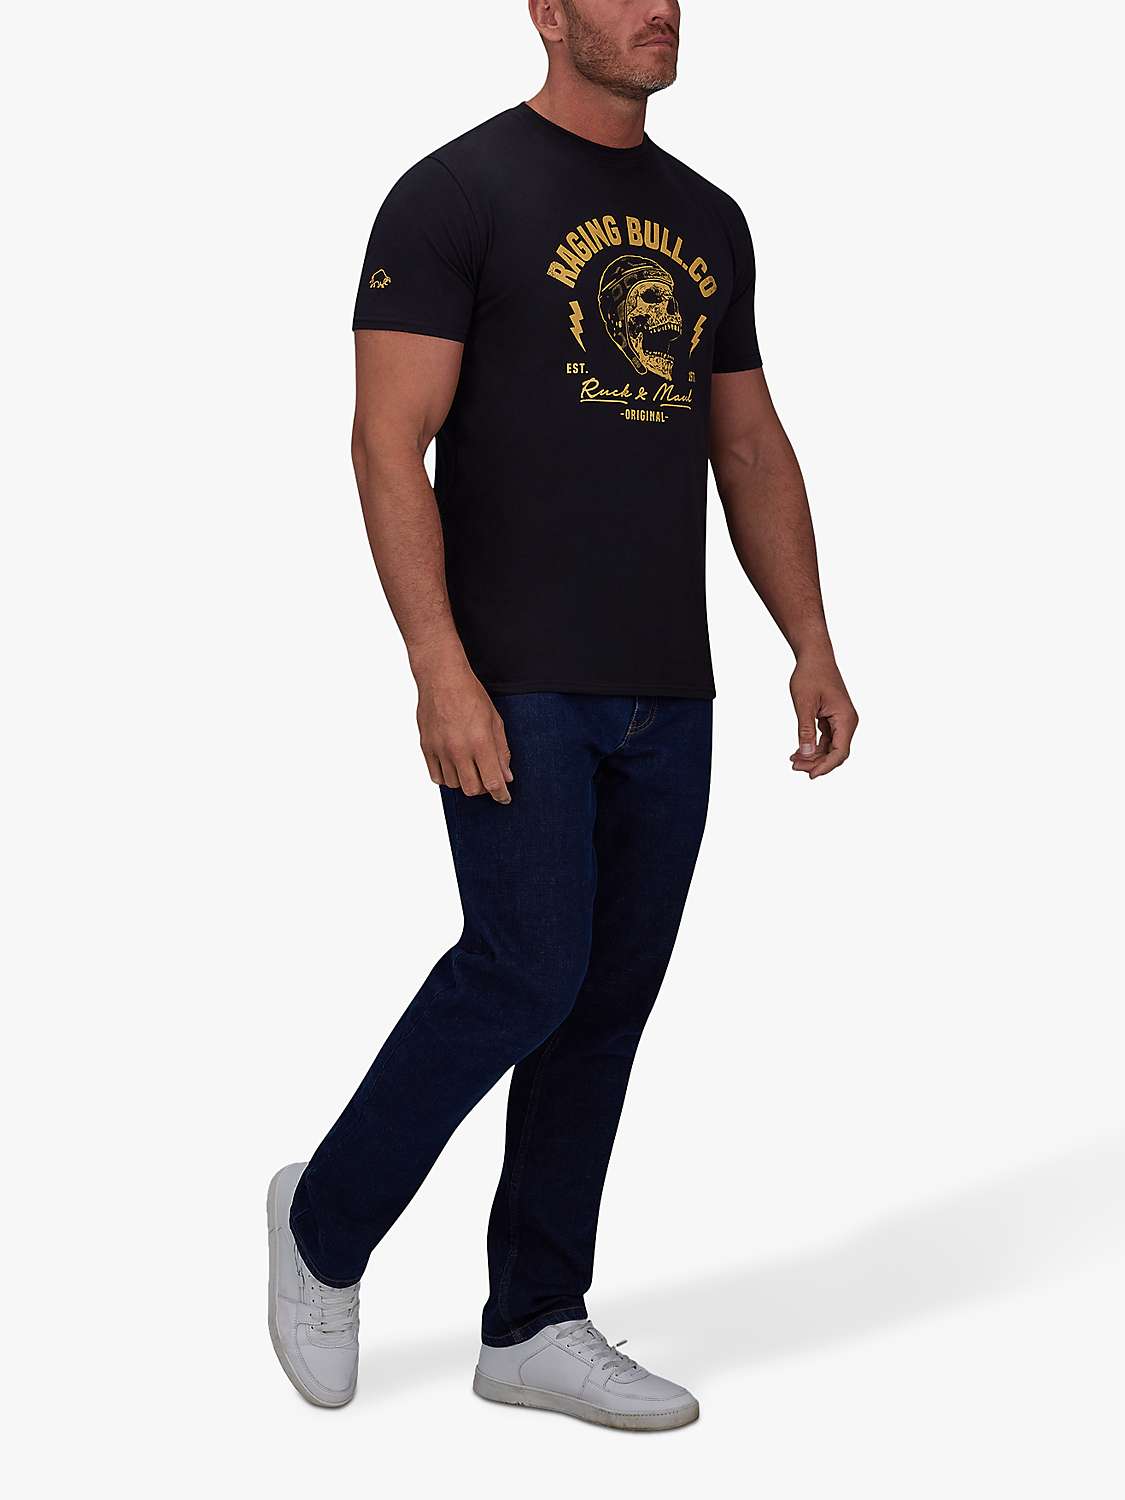 Buy Raging Bull Ruck & Maul Graphic T-Shirt, Black Online at johnlewis.com